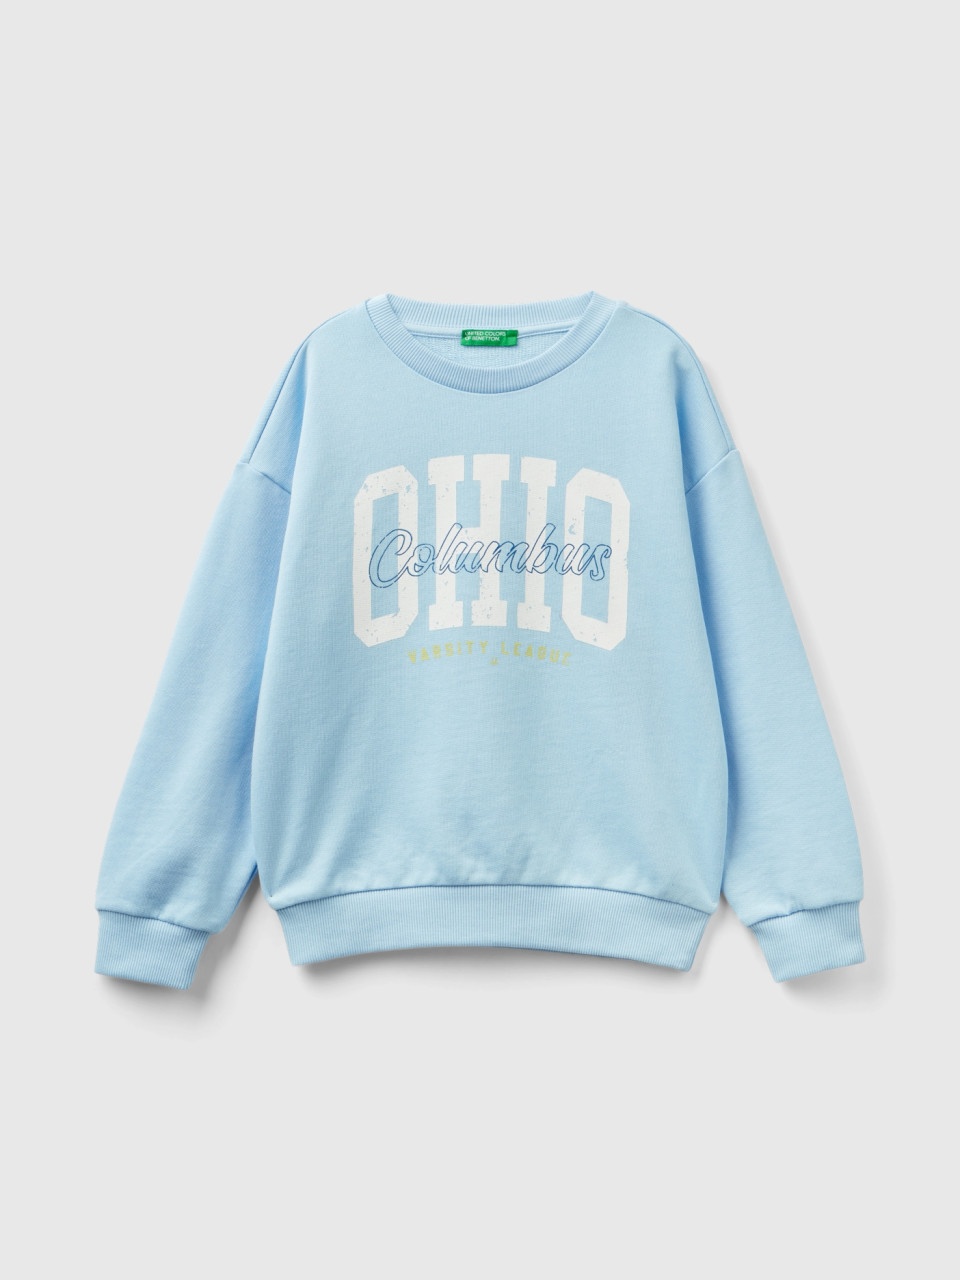 Benetton, Pullover College Style Sweatshirt, Sky Blue, Kids